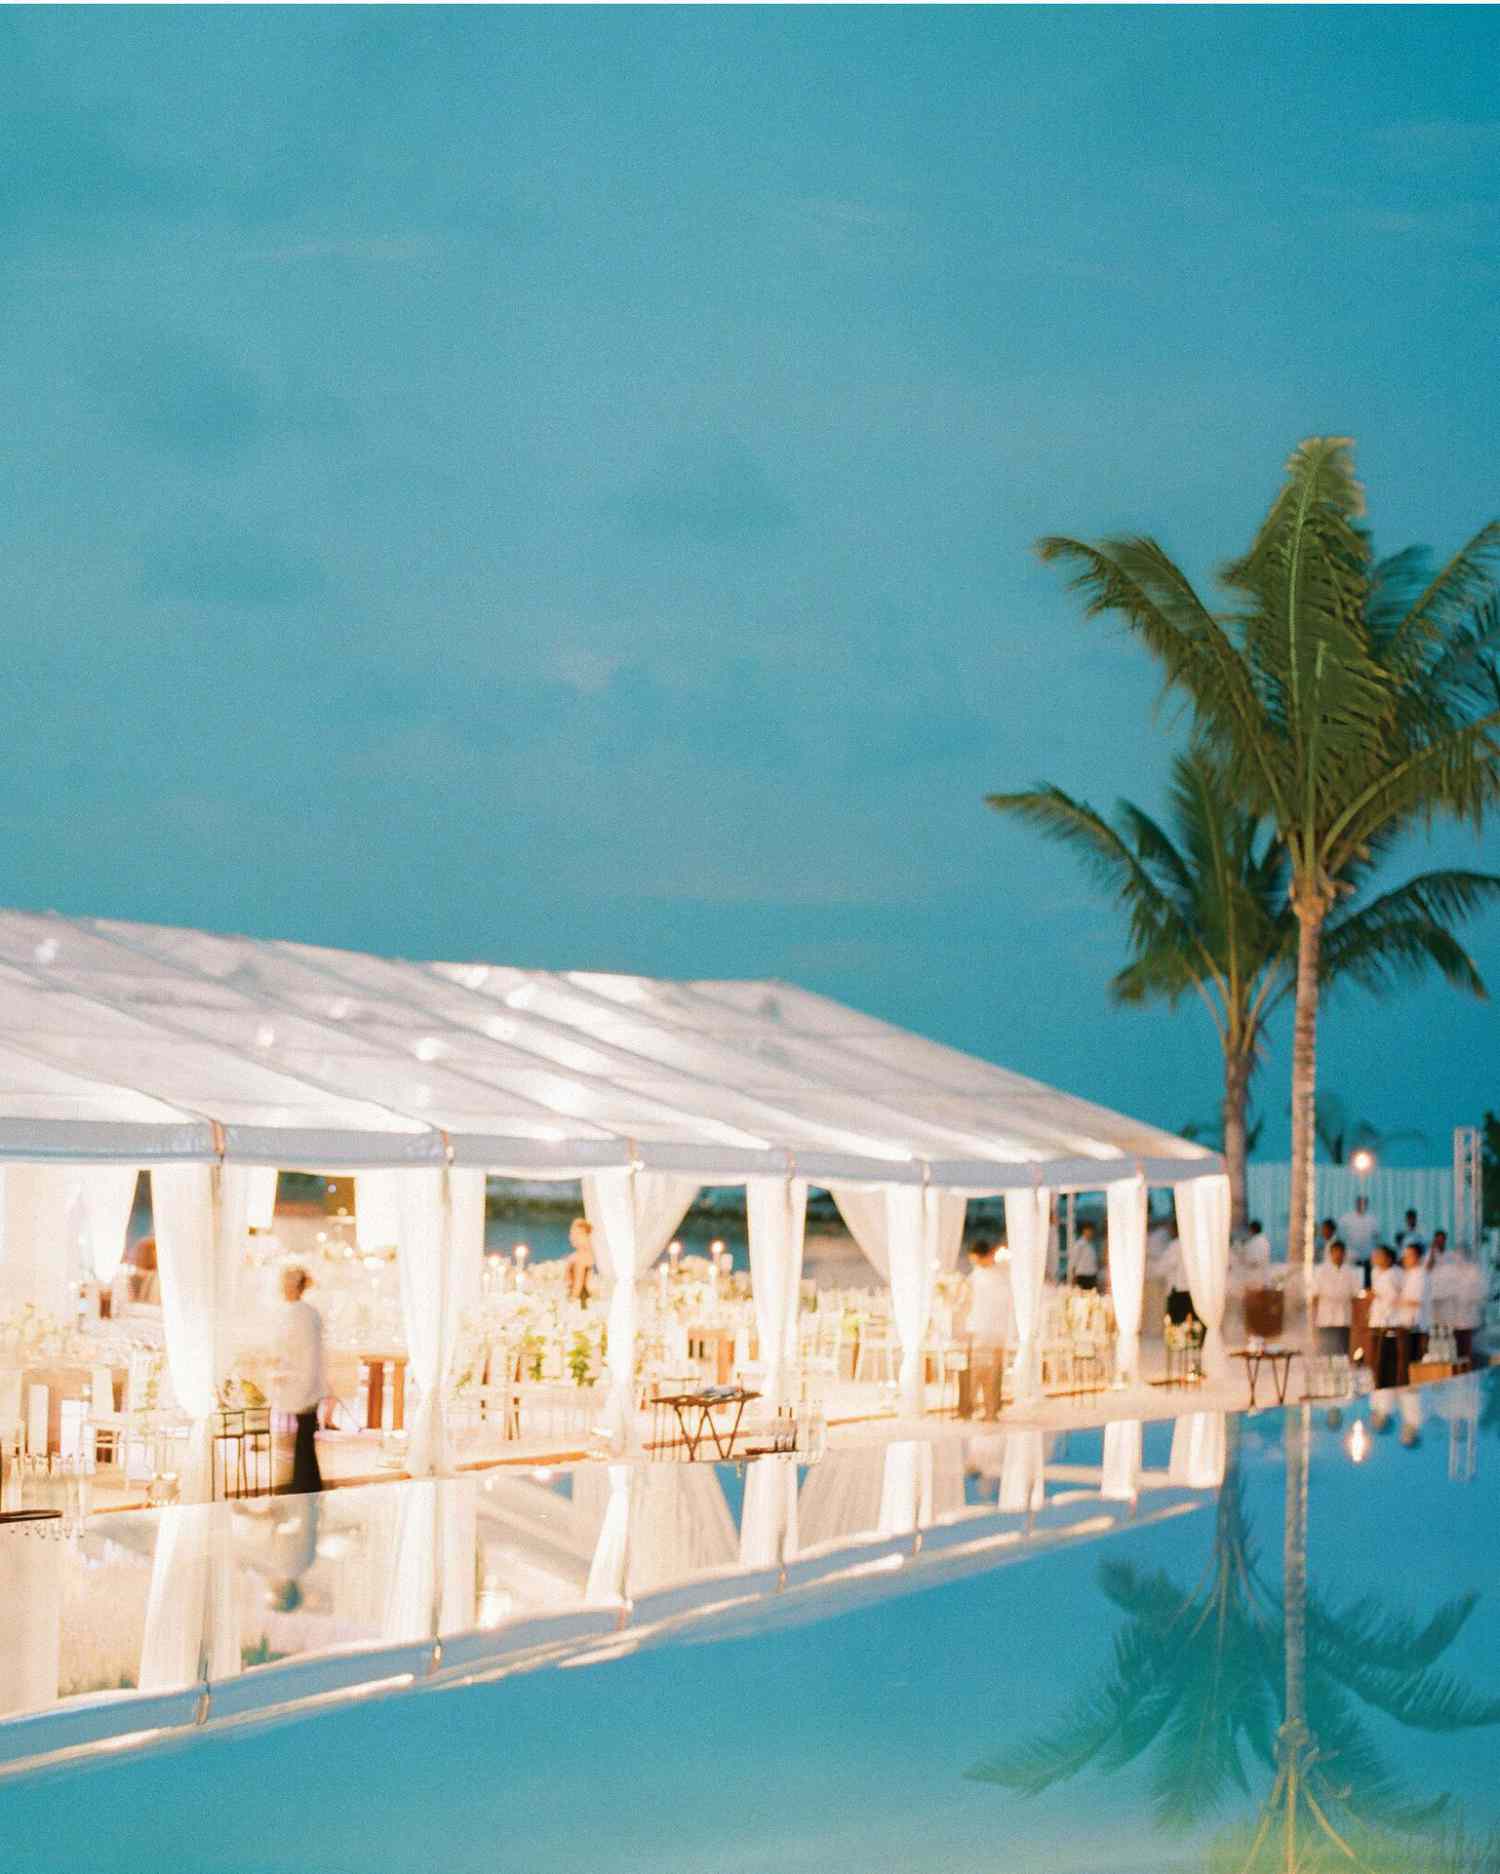 peony-richard-wedding-maldives-reception-tent-on-beach-by-pool-1980-s112383.jpg